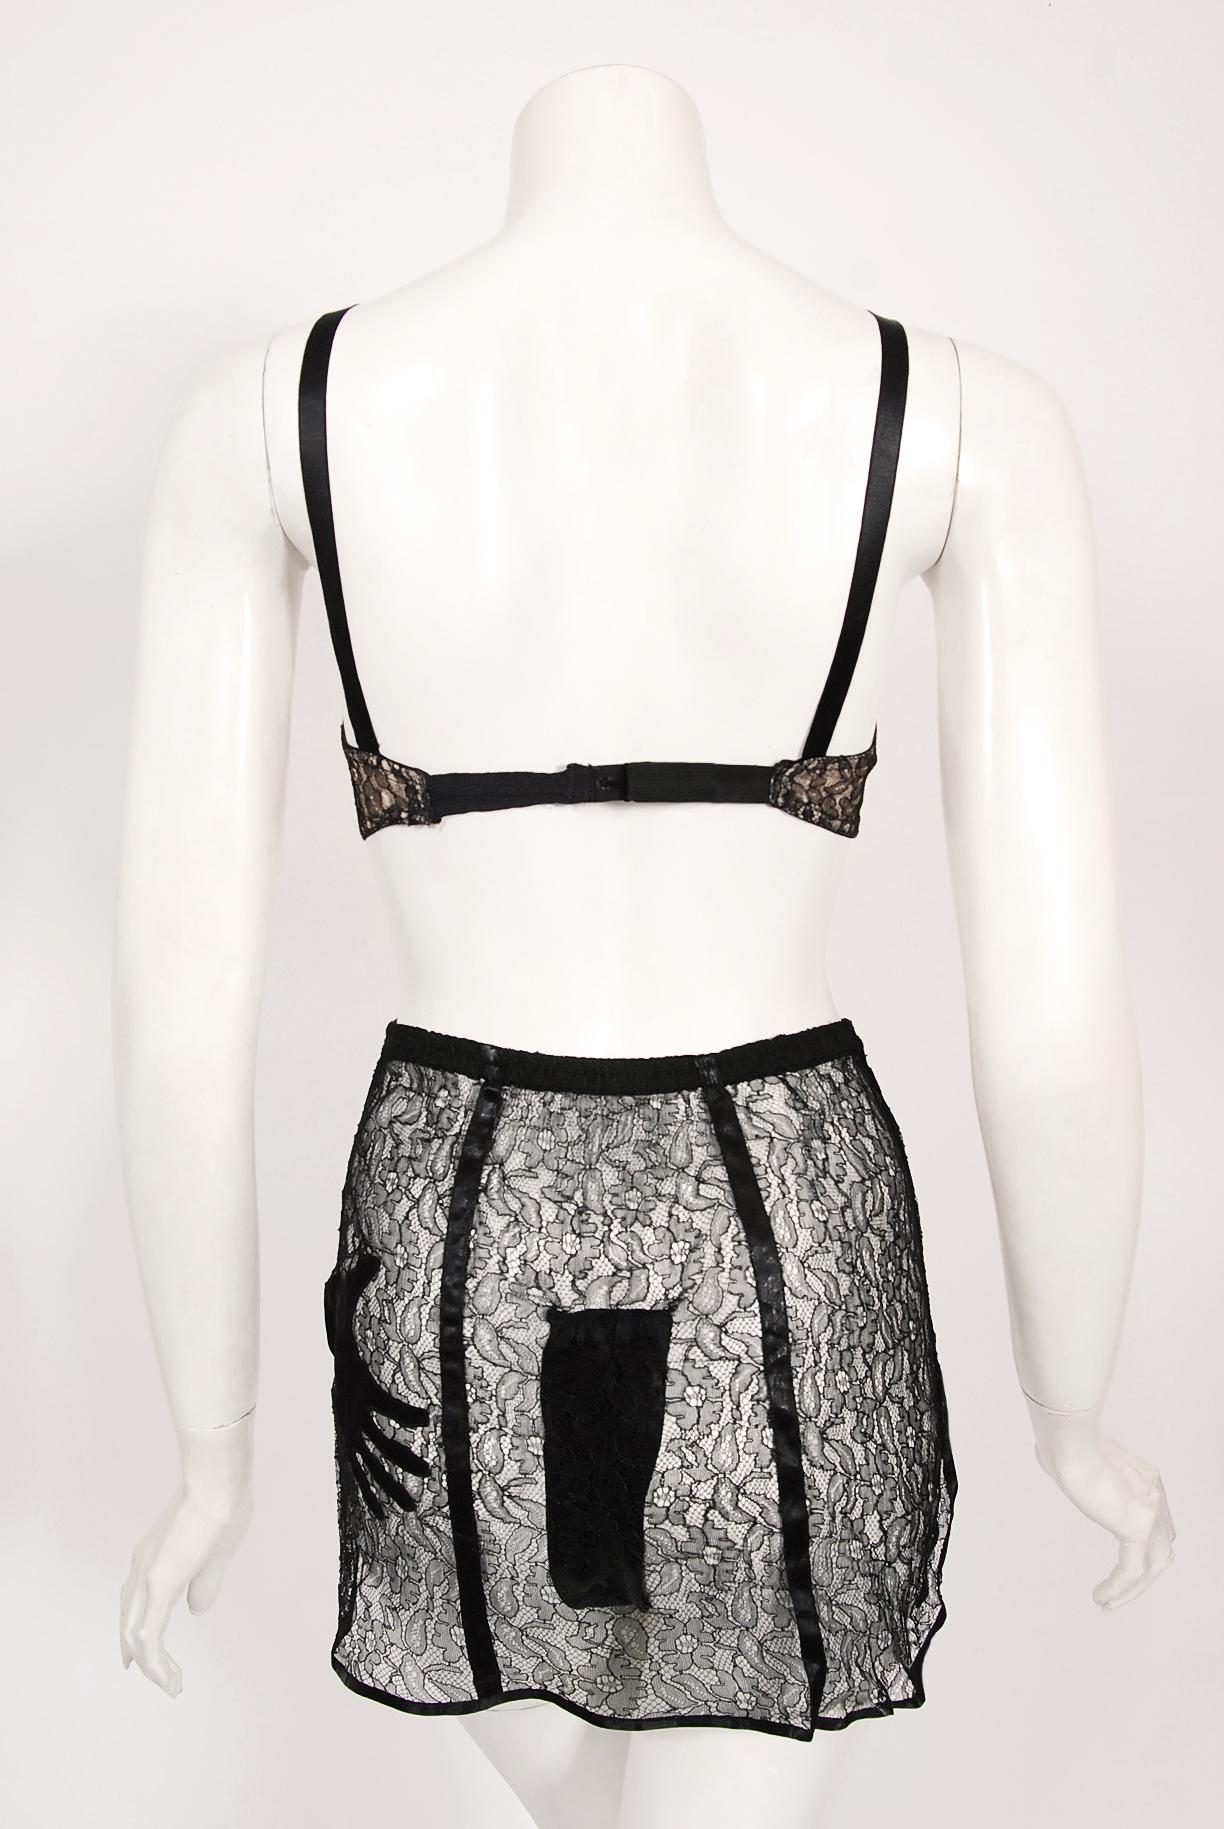 Vintage 1940's Schiaparelli Inspired 'Hands On' Silk Appliqué Lace Bra & Panties 5